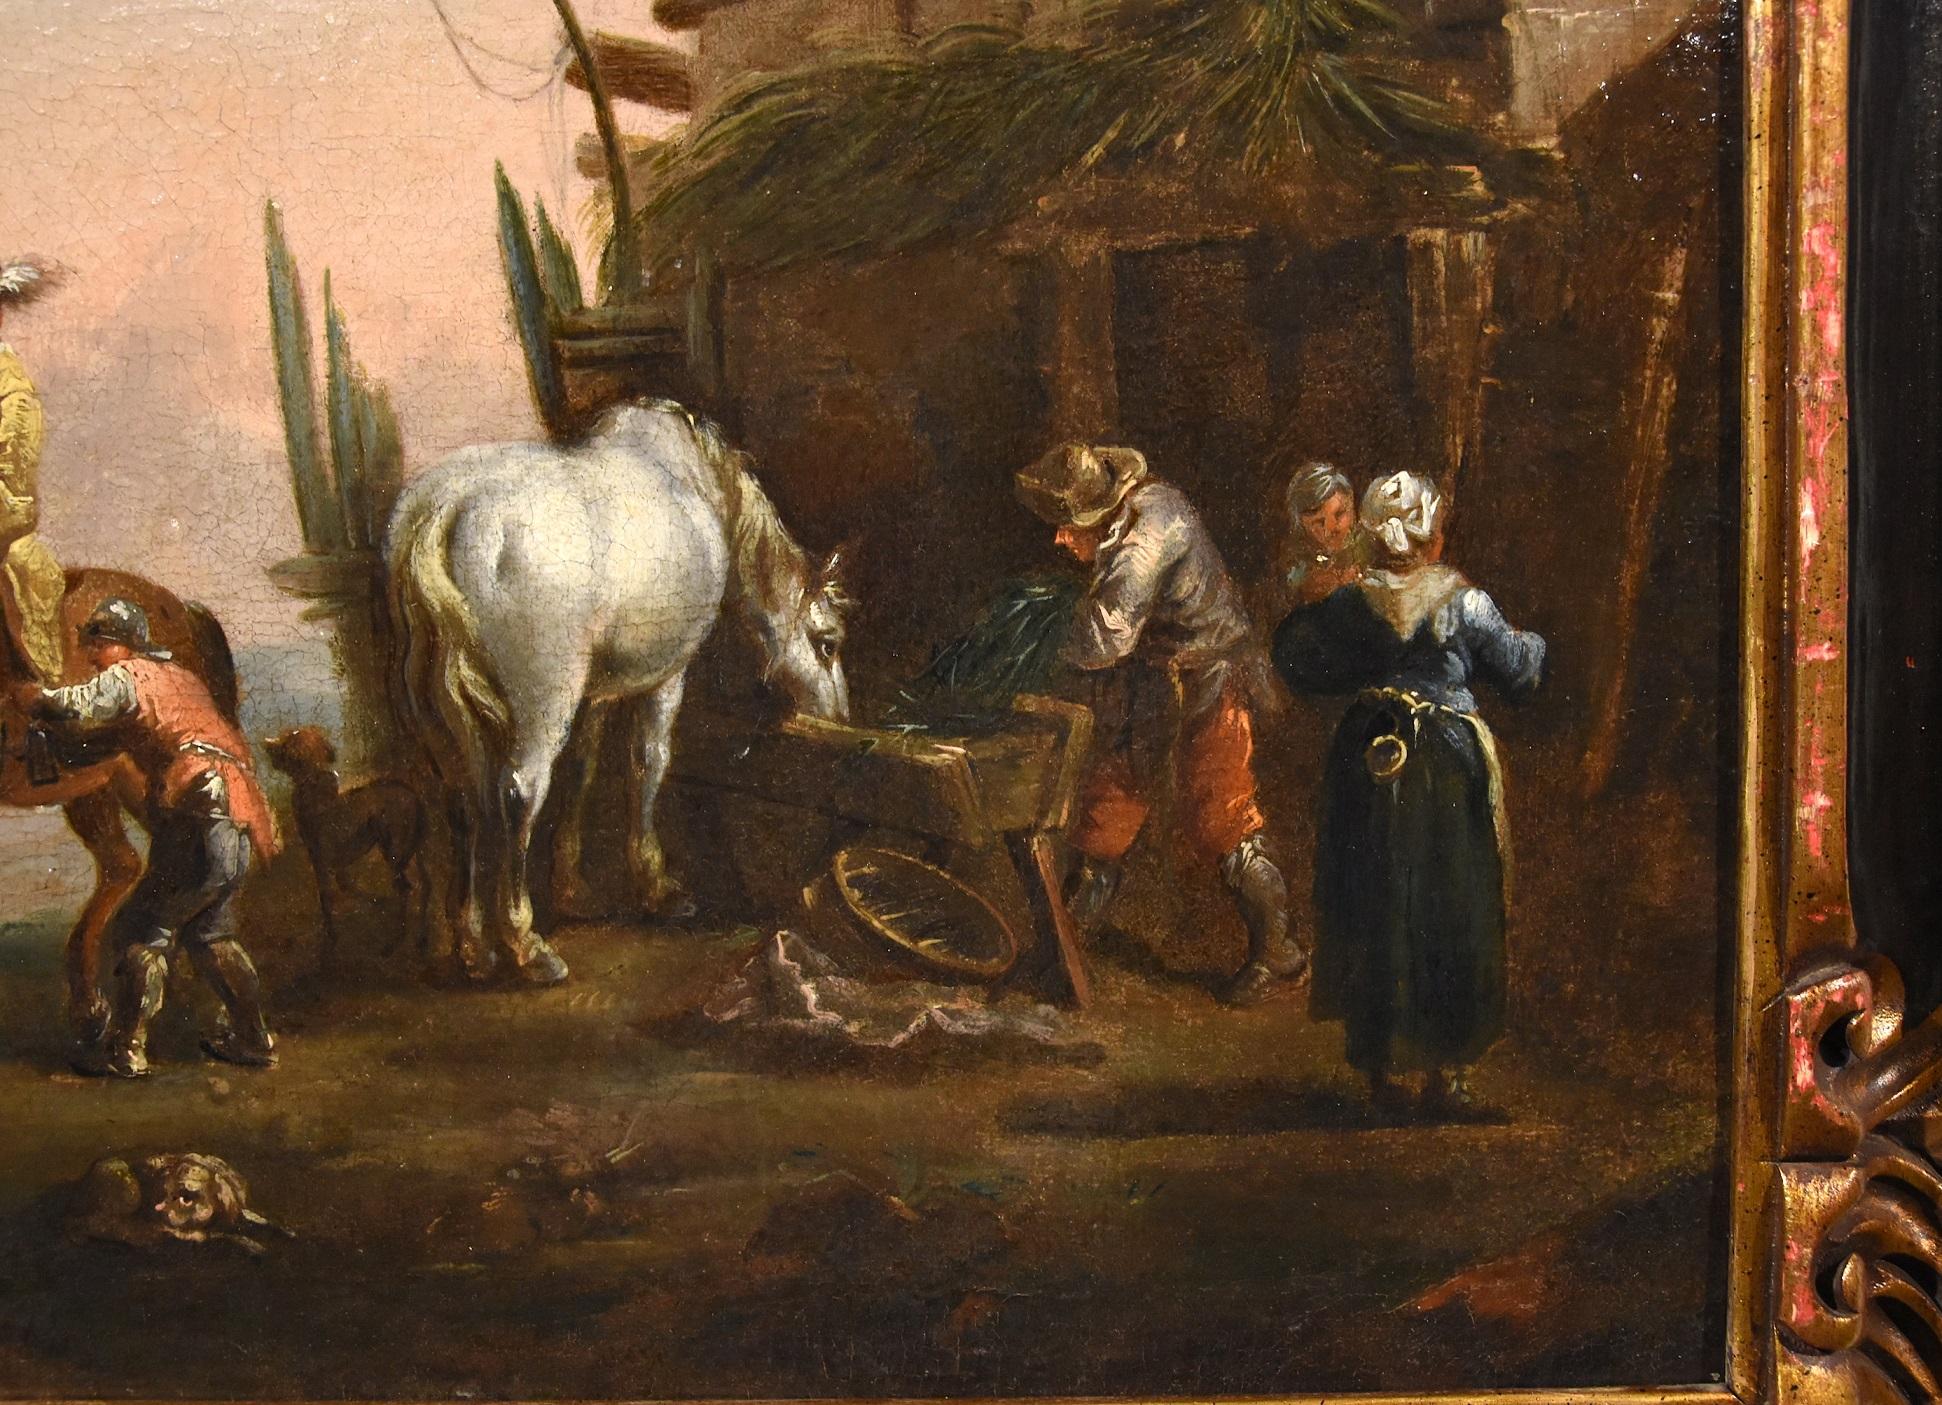 Knight Van Douw Paint Oil on canvas Old master 17/18th Century Flemish Art Italy For Sale 2